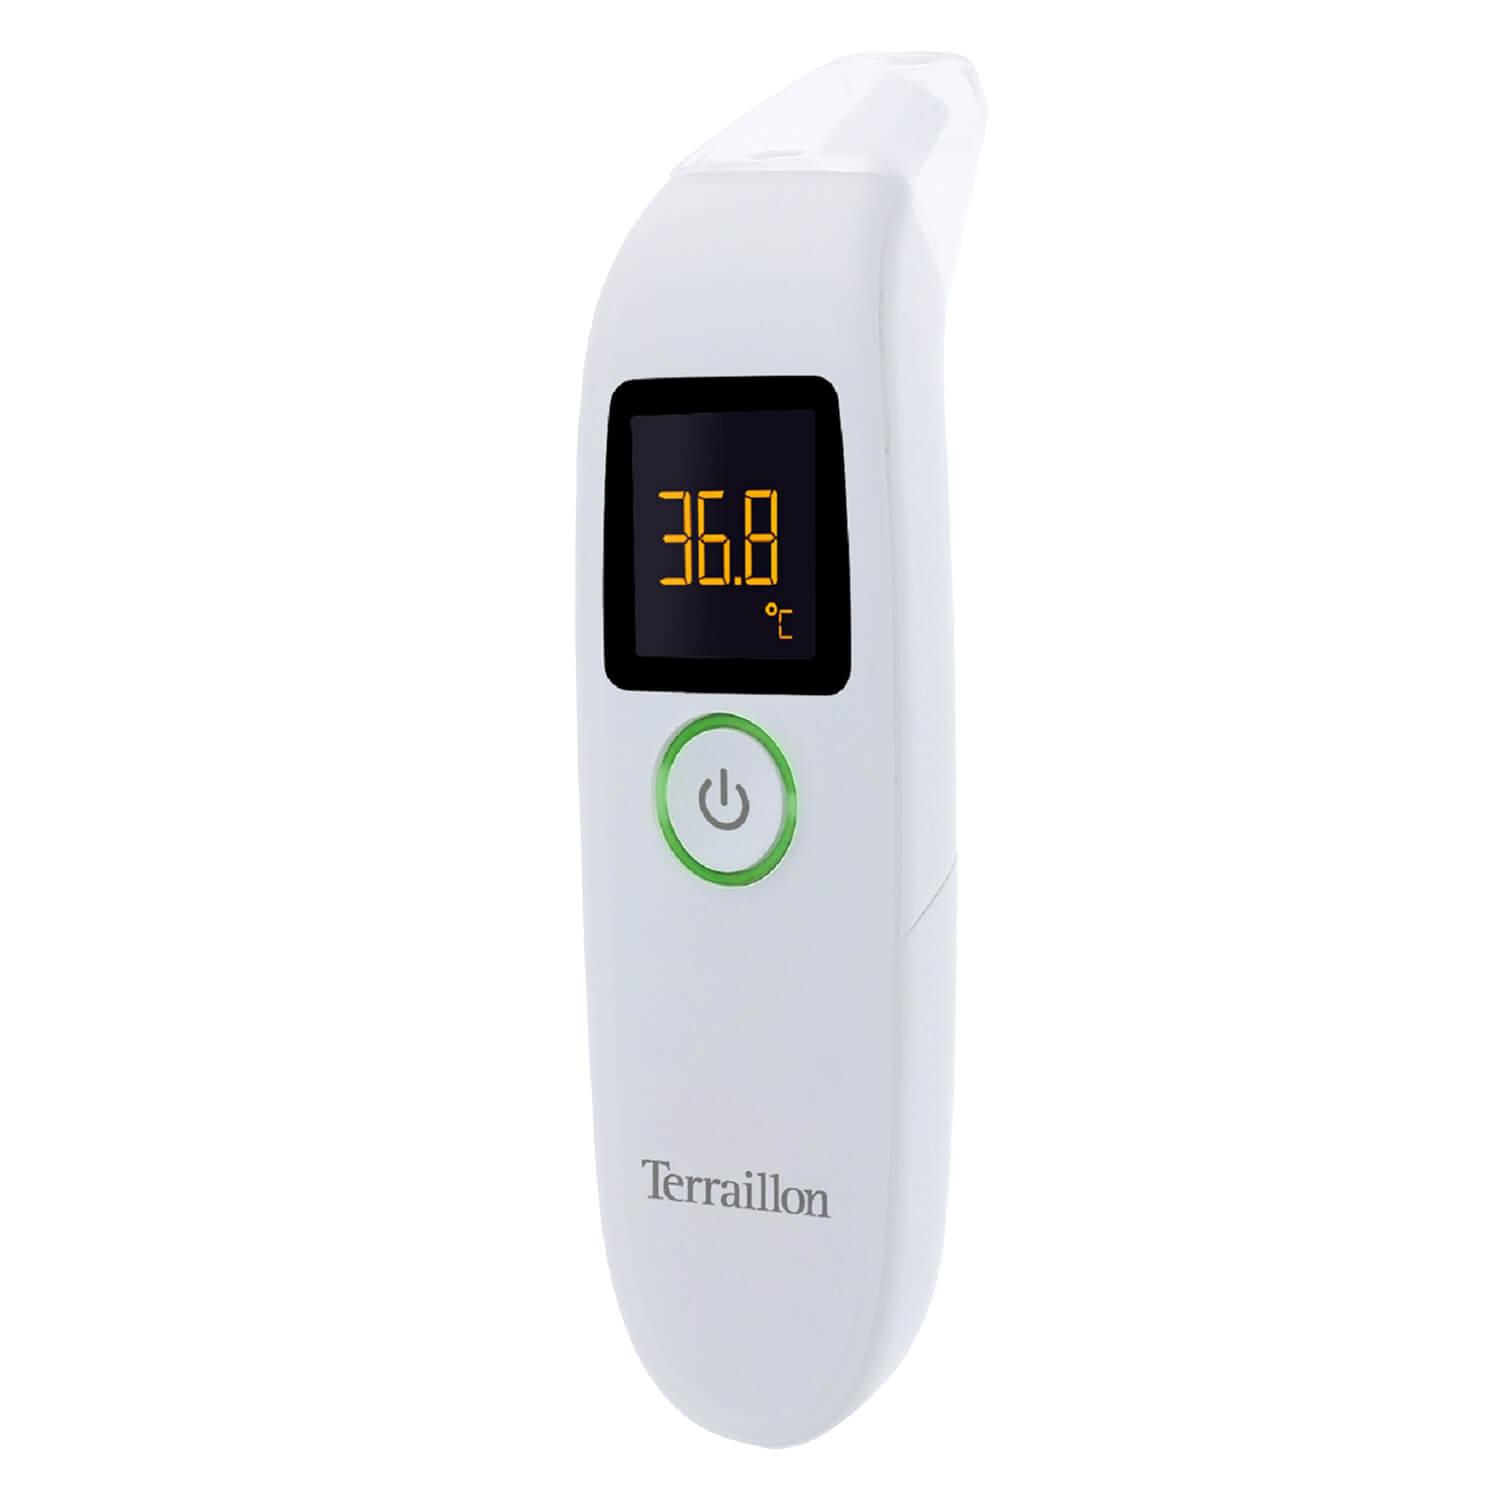 Terraillon - Thermomètre infrarouge 3 en 1